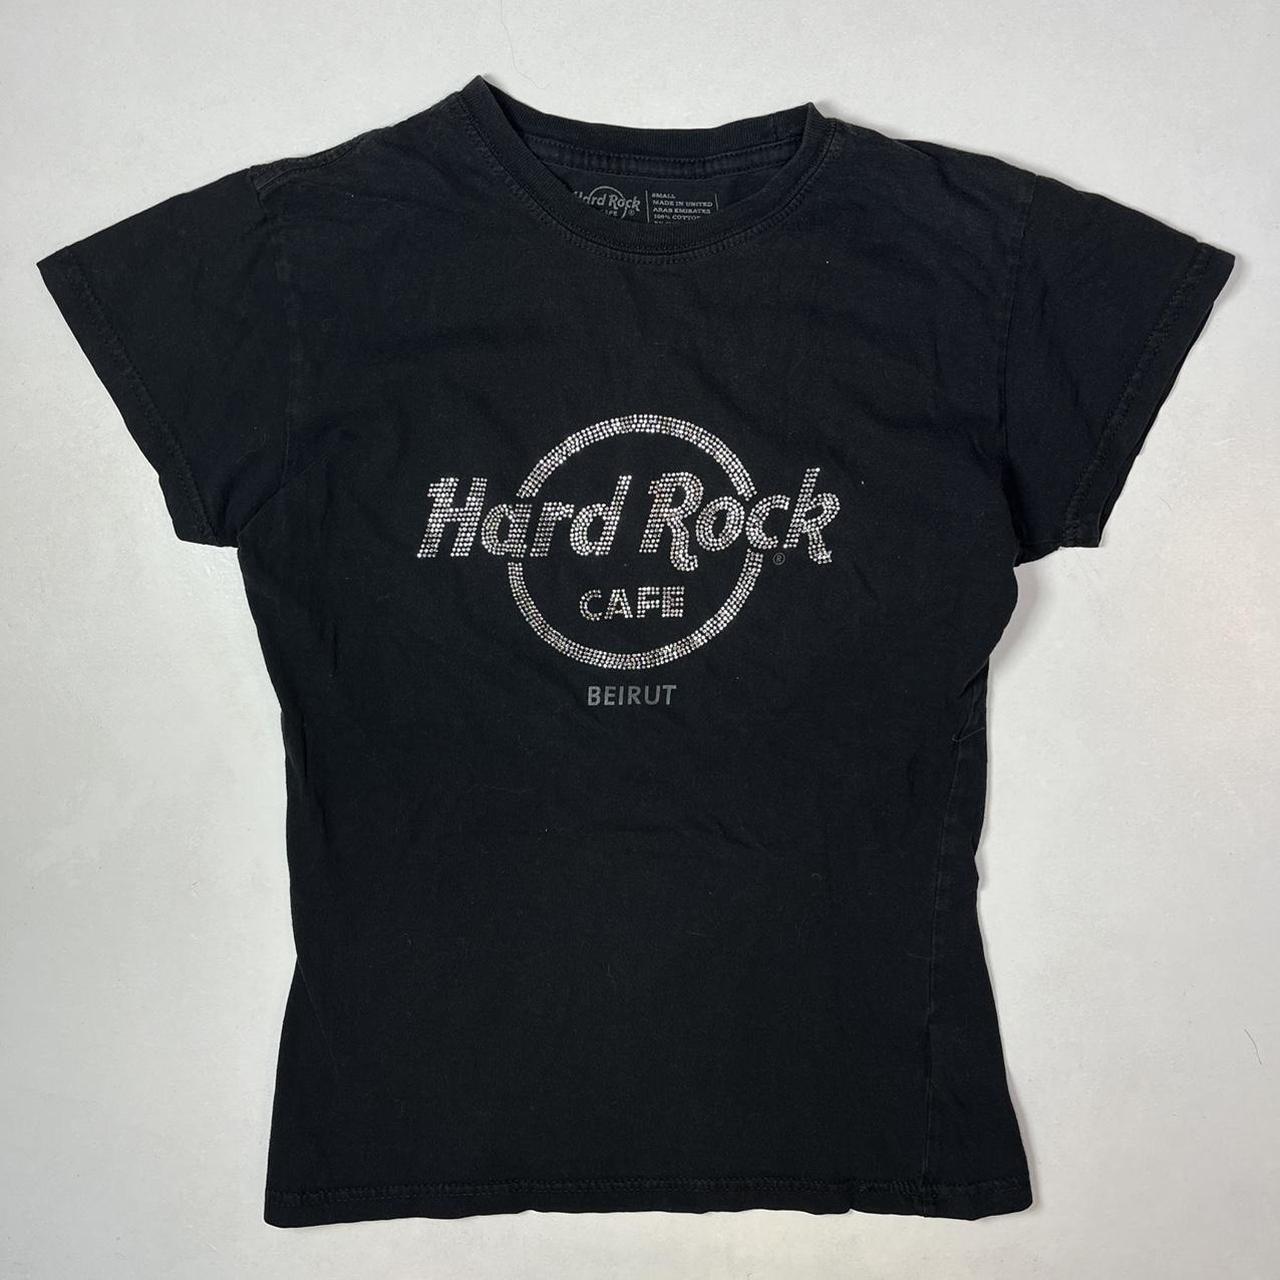 Hard Rock Cafe Women's Black T-shirt